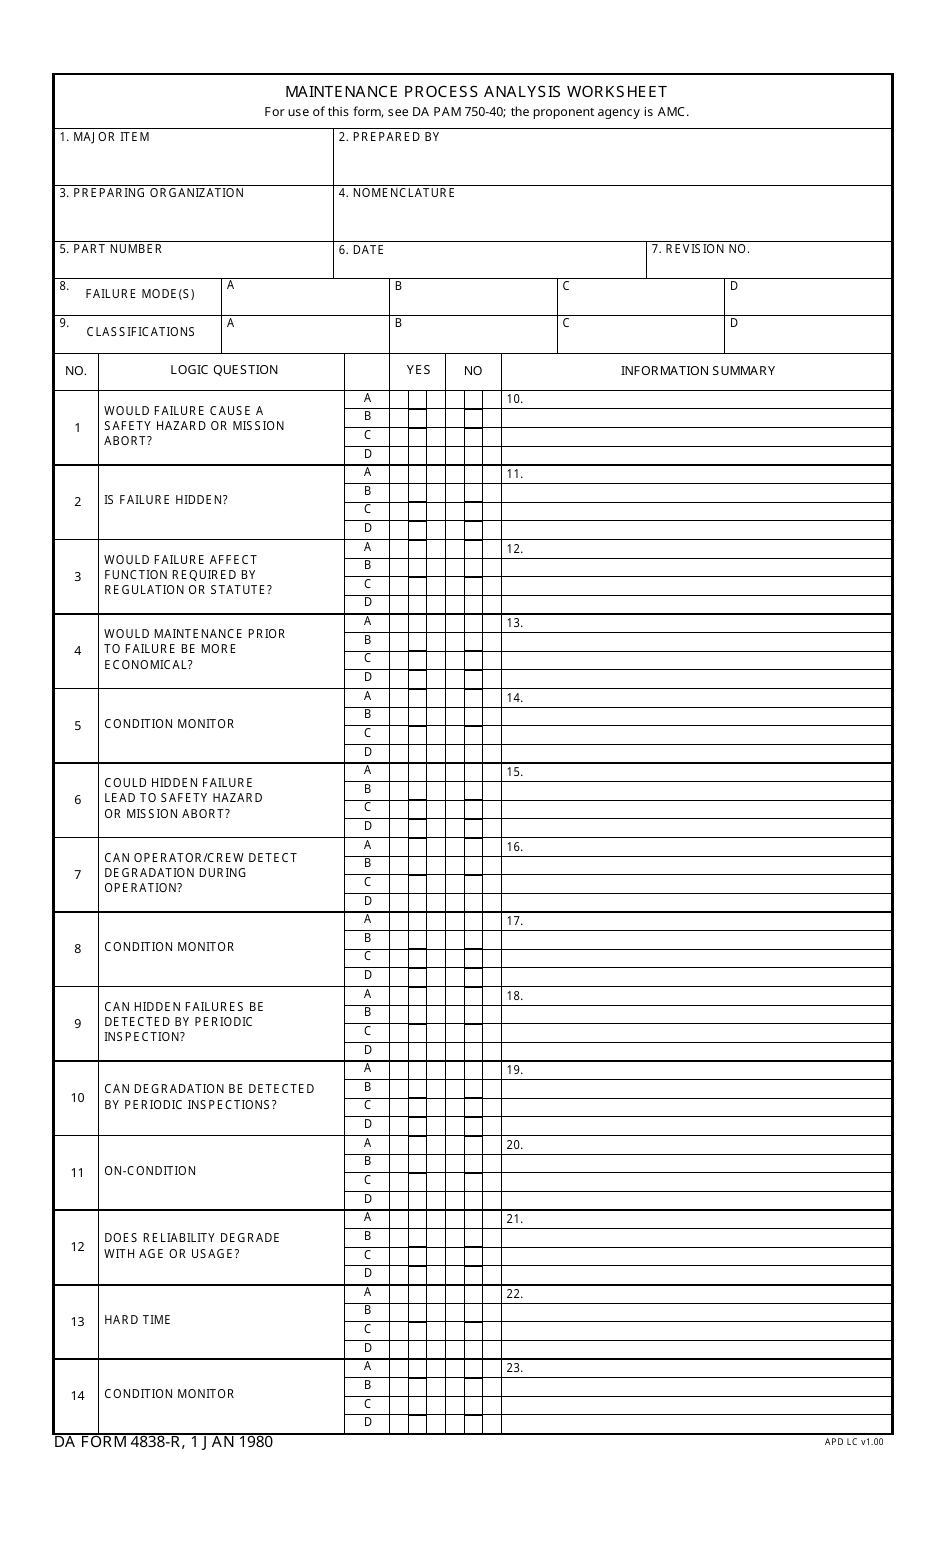 DA Form 4838-R Maintenance Process Analysis Worksheet, Page 1